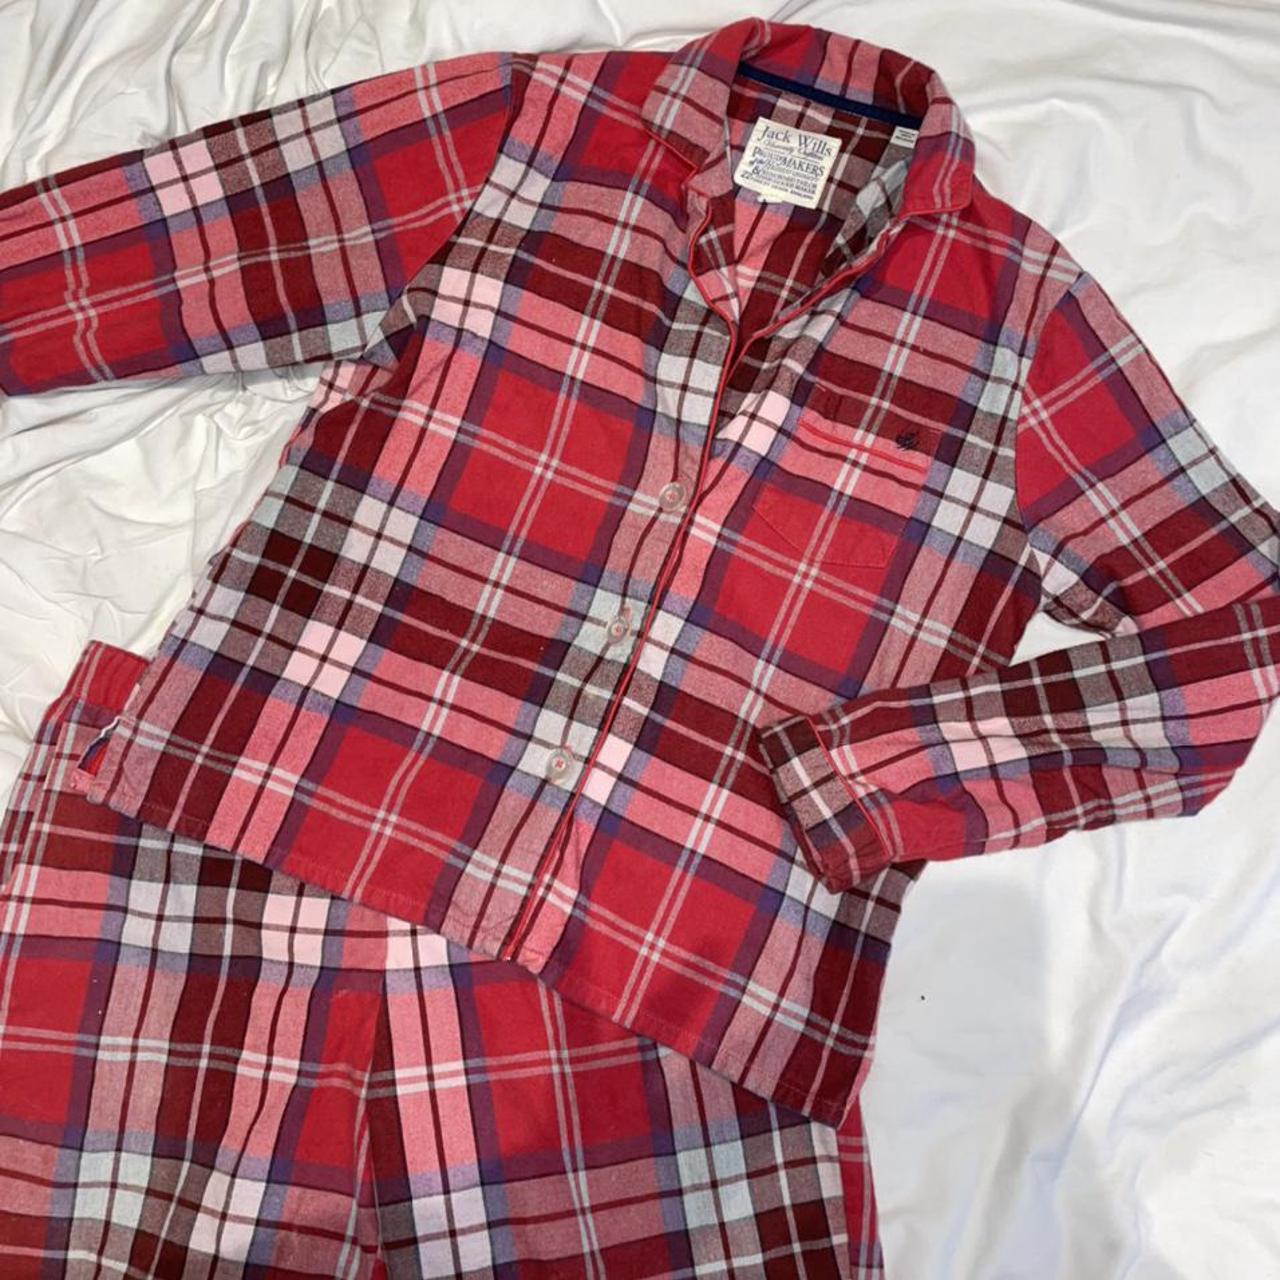 Jack Wills Women's Pajamas | Depop